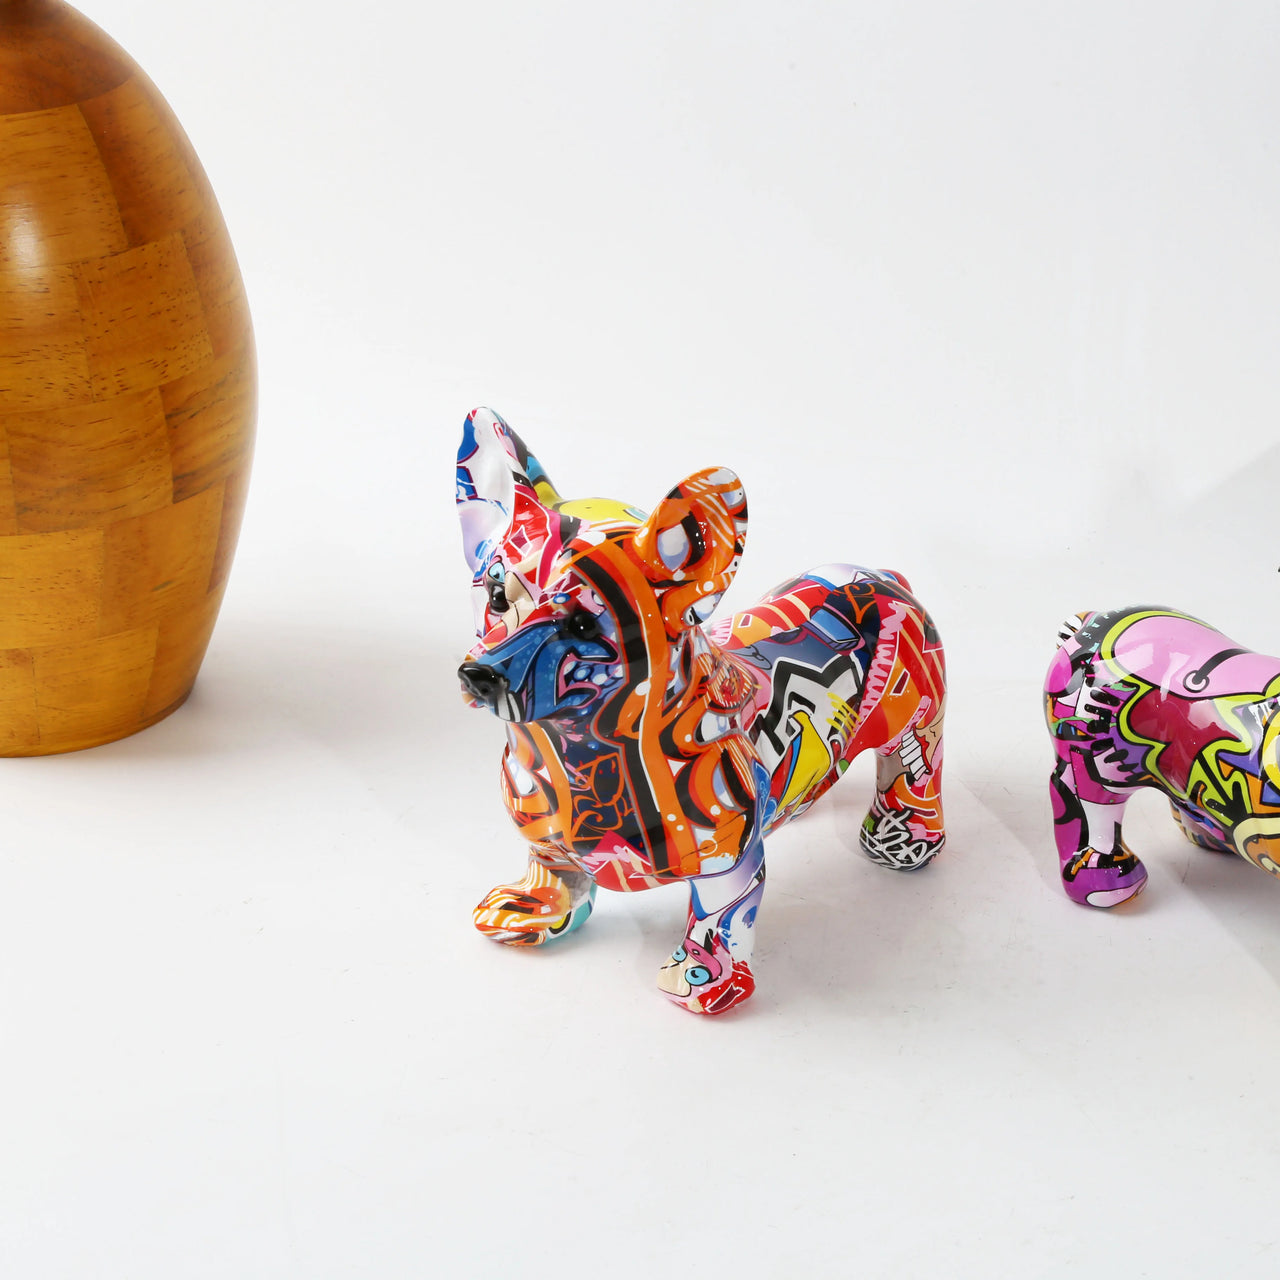 Modern Art Graffiti Corgi Dog Painting Resin Crafts Sculptures and Statues Crafts Gift